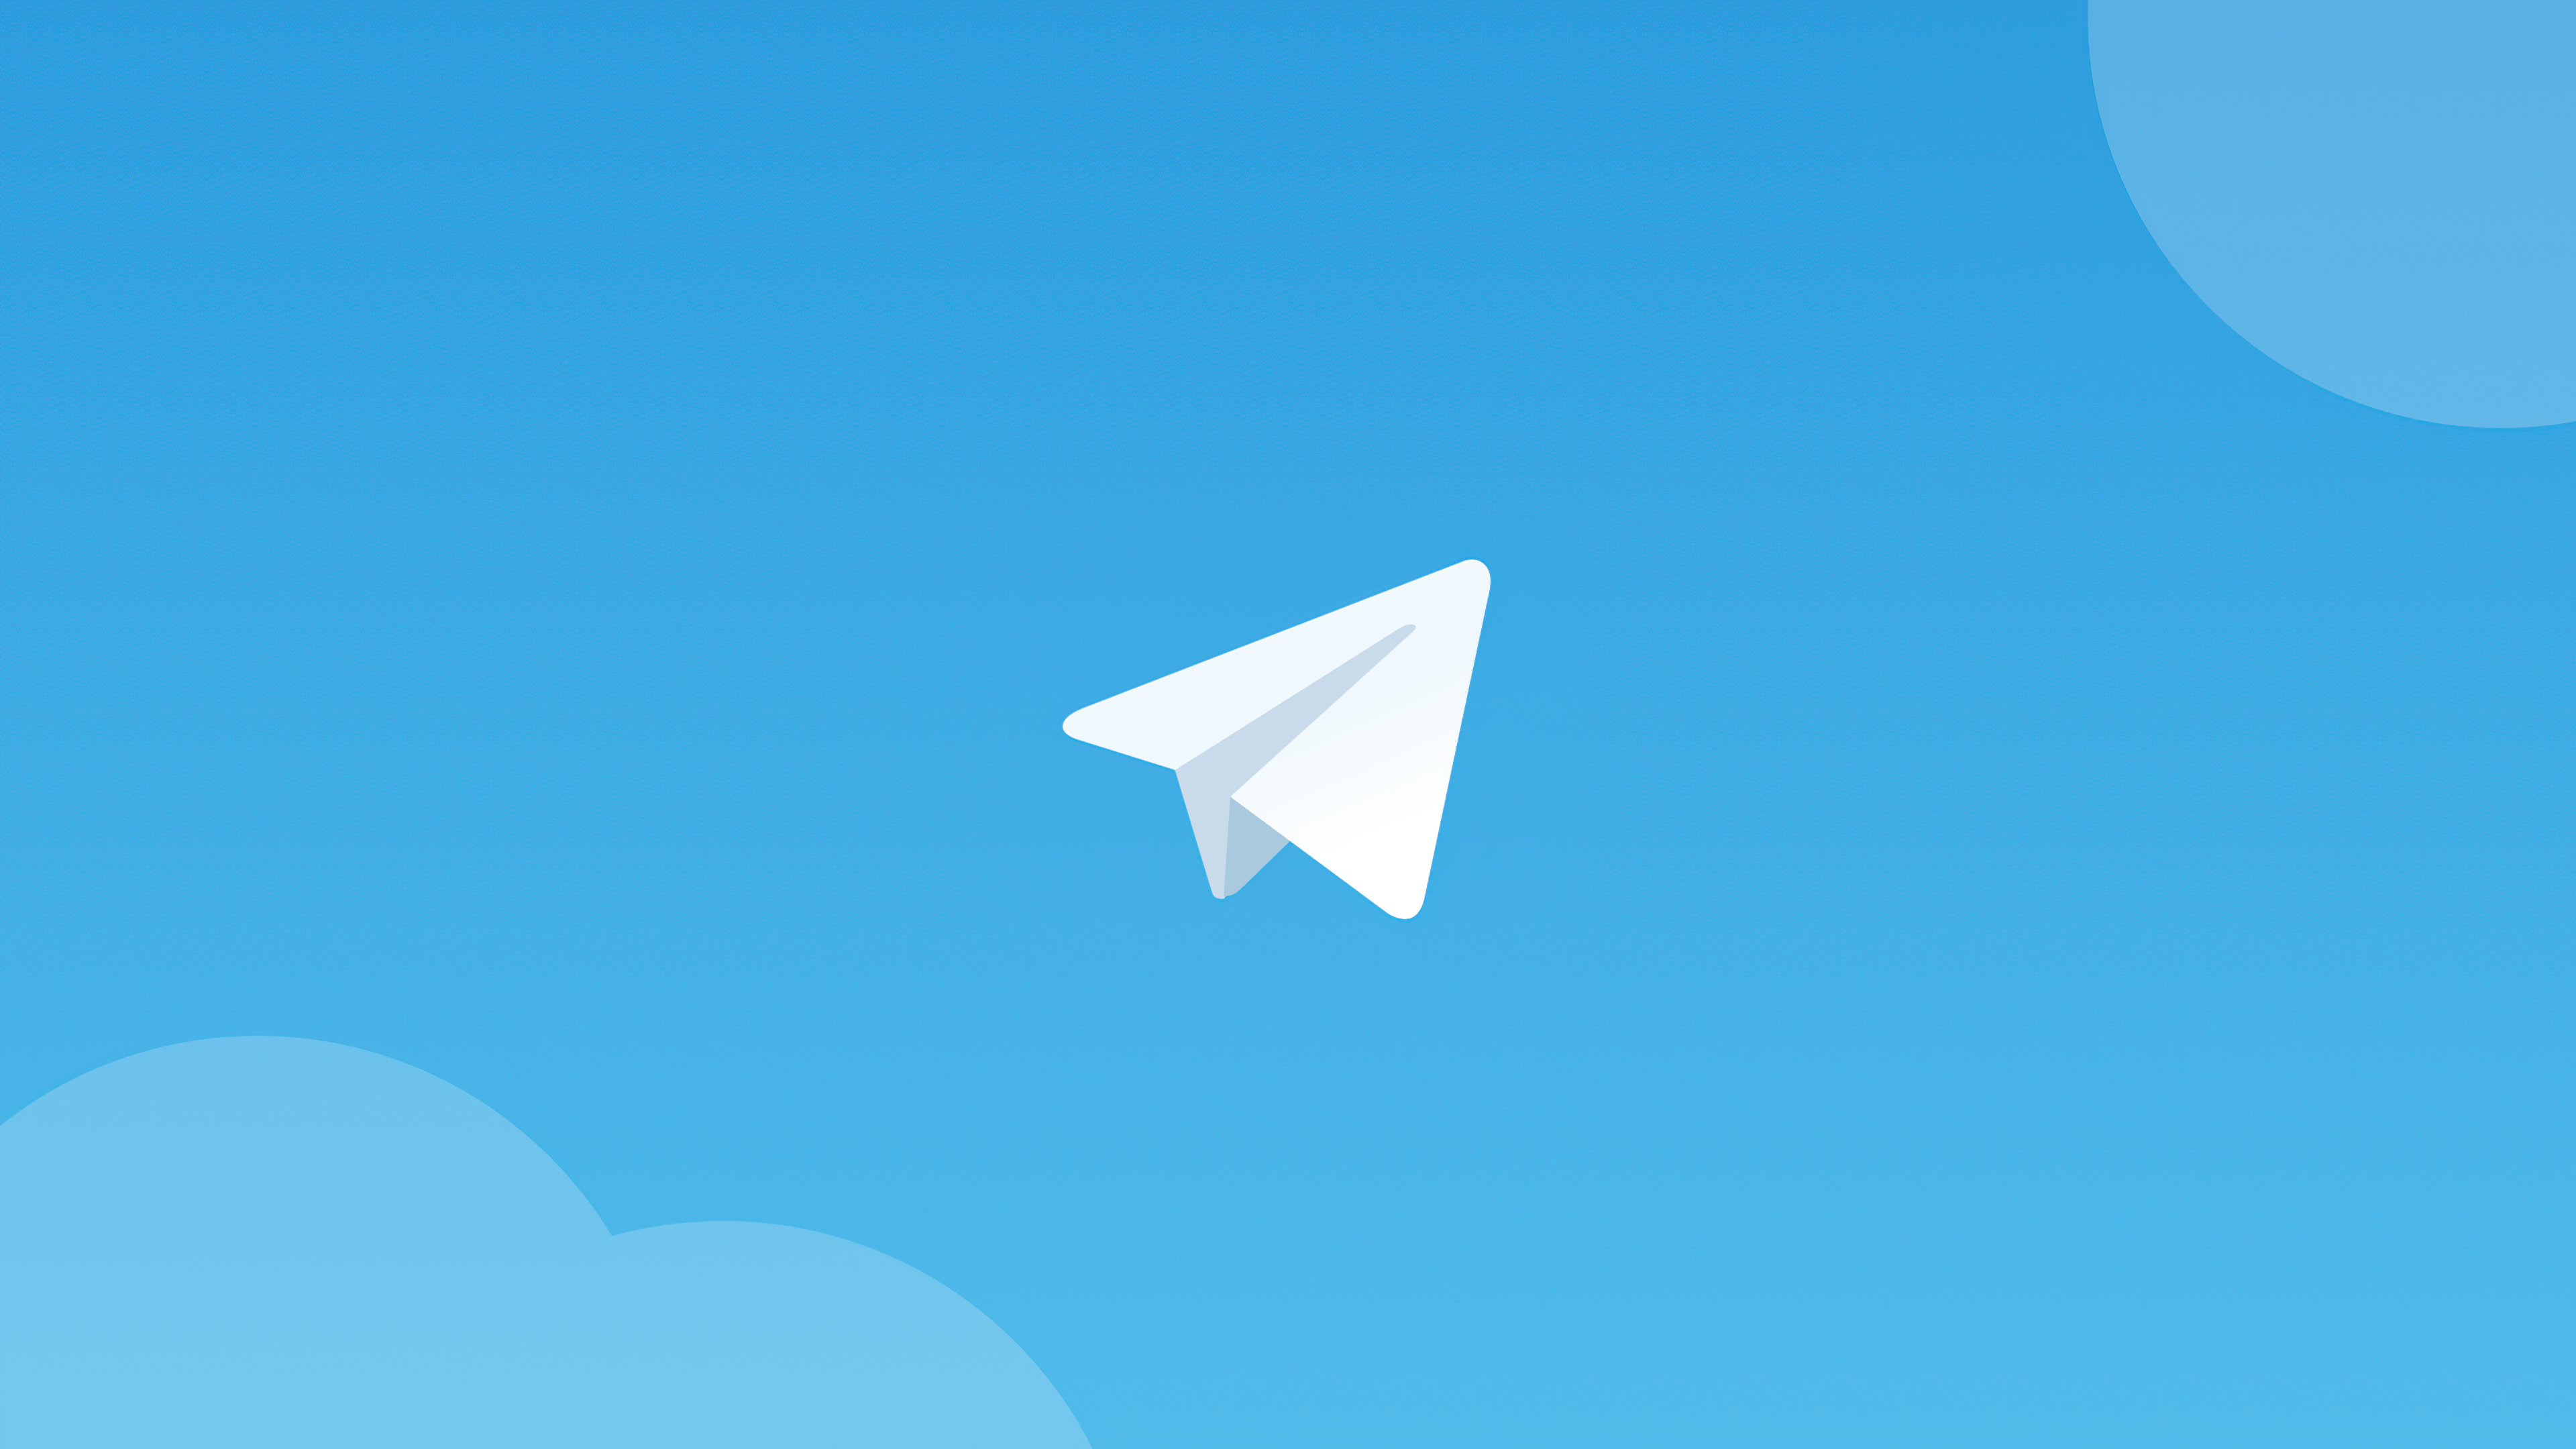 Telegram Logo Minimal 4k 540x960 Resolution HD 4k Wallpaper, Image, Background, Photo and Picture